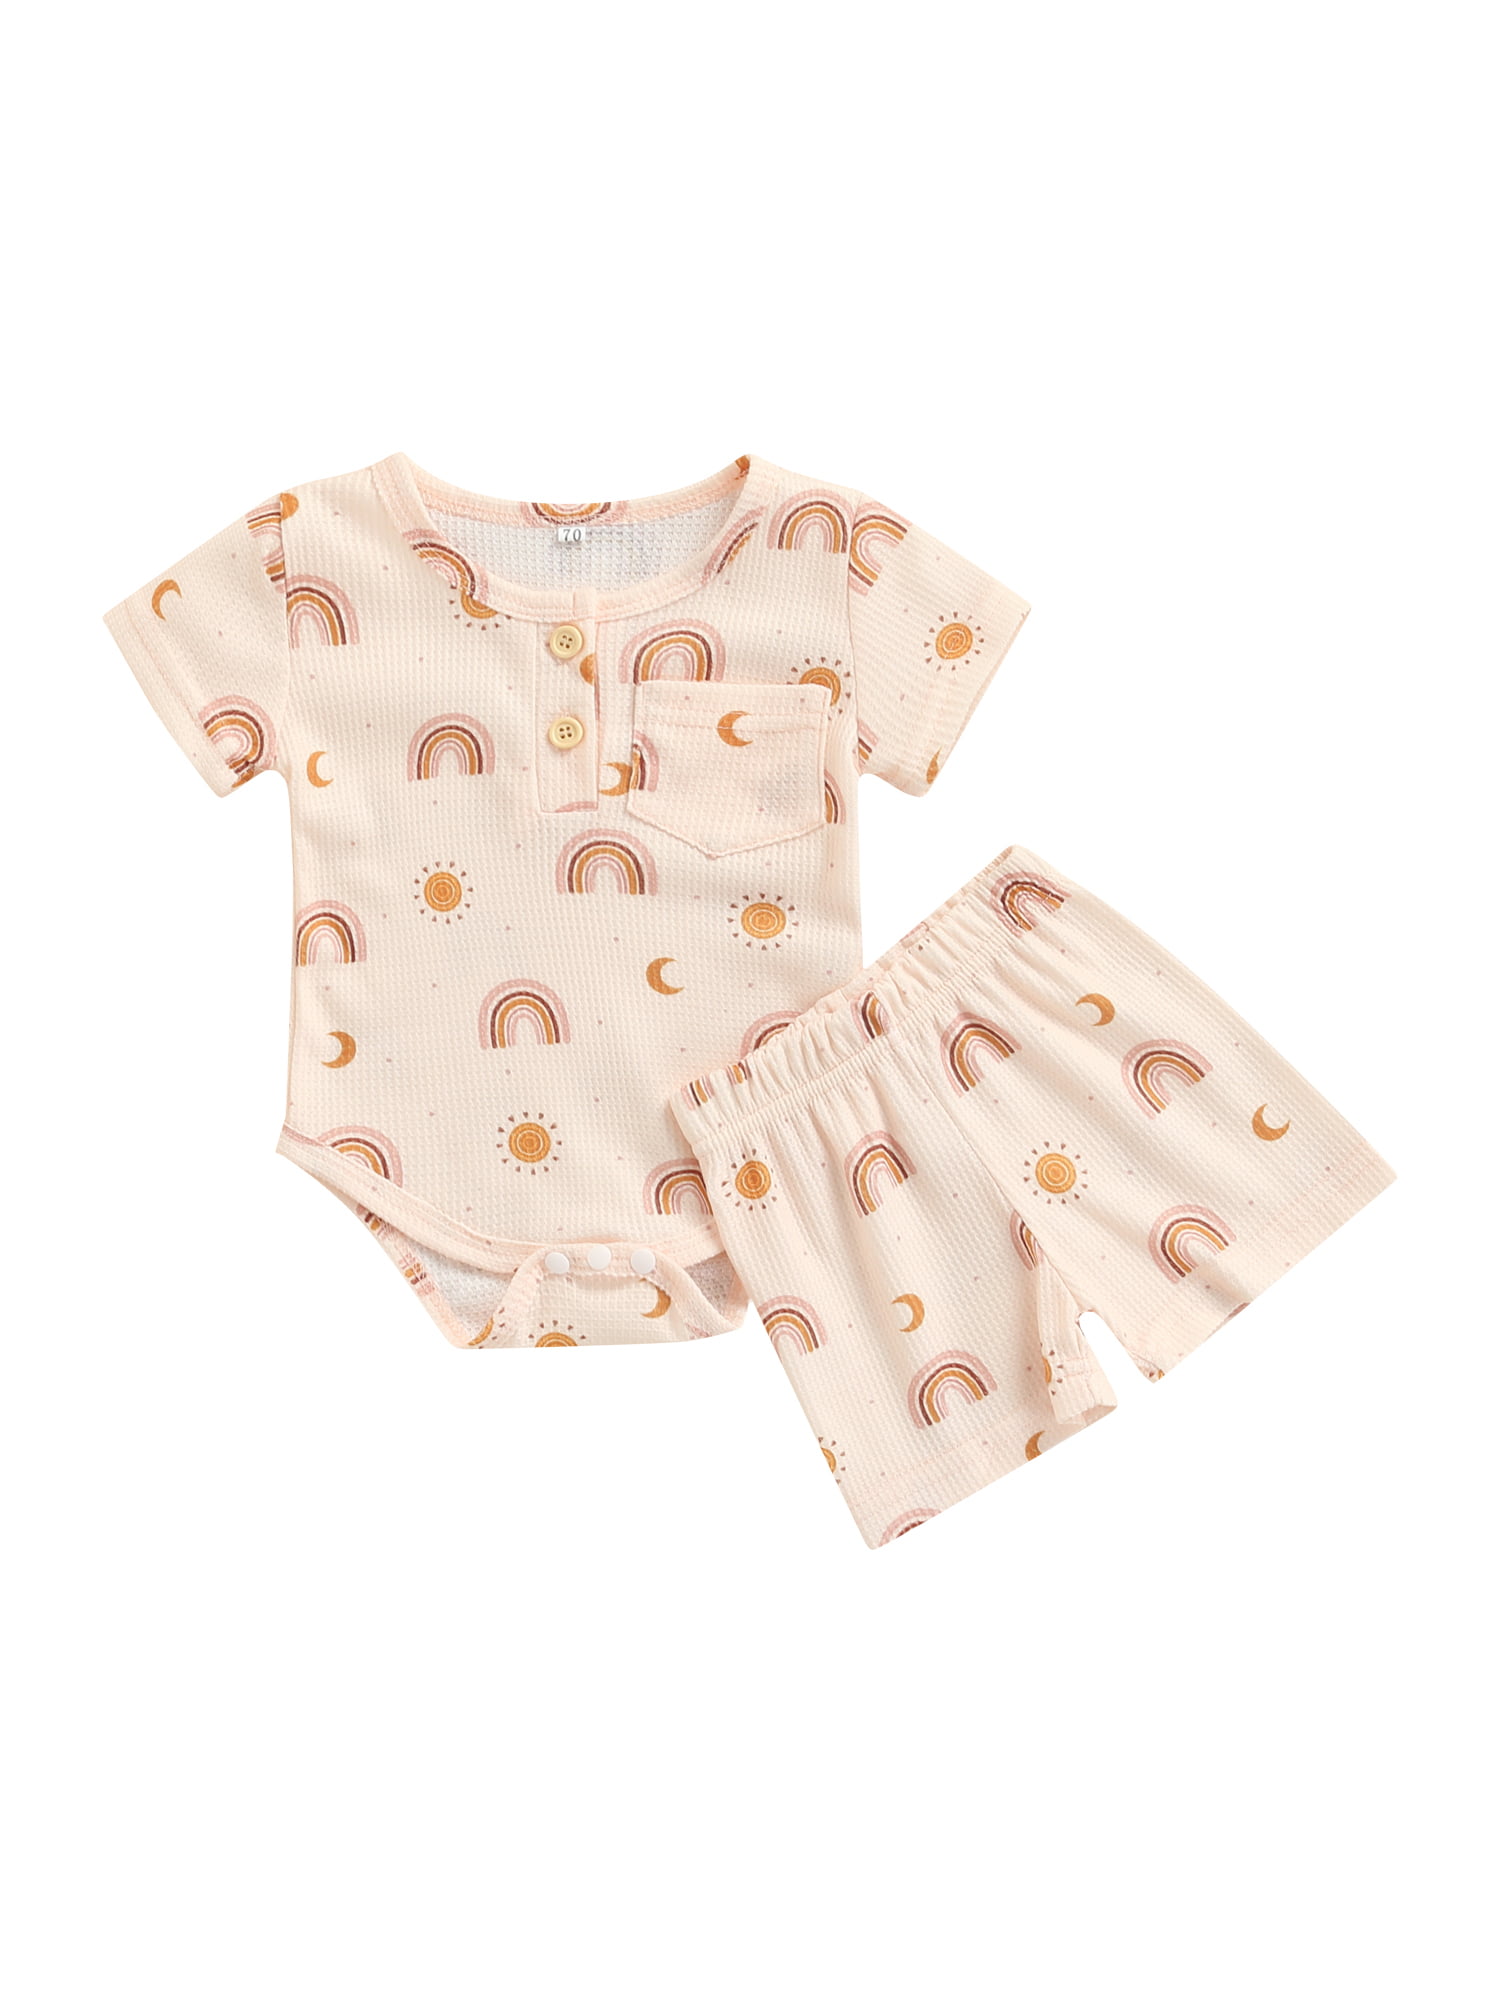 Baby Girls Boy Clothes Set Short Sleeve Romper Jump Suit Sale